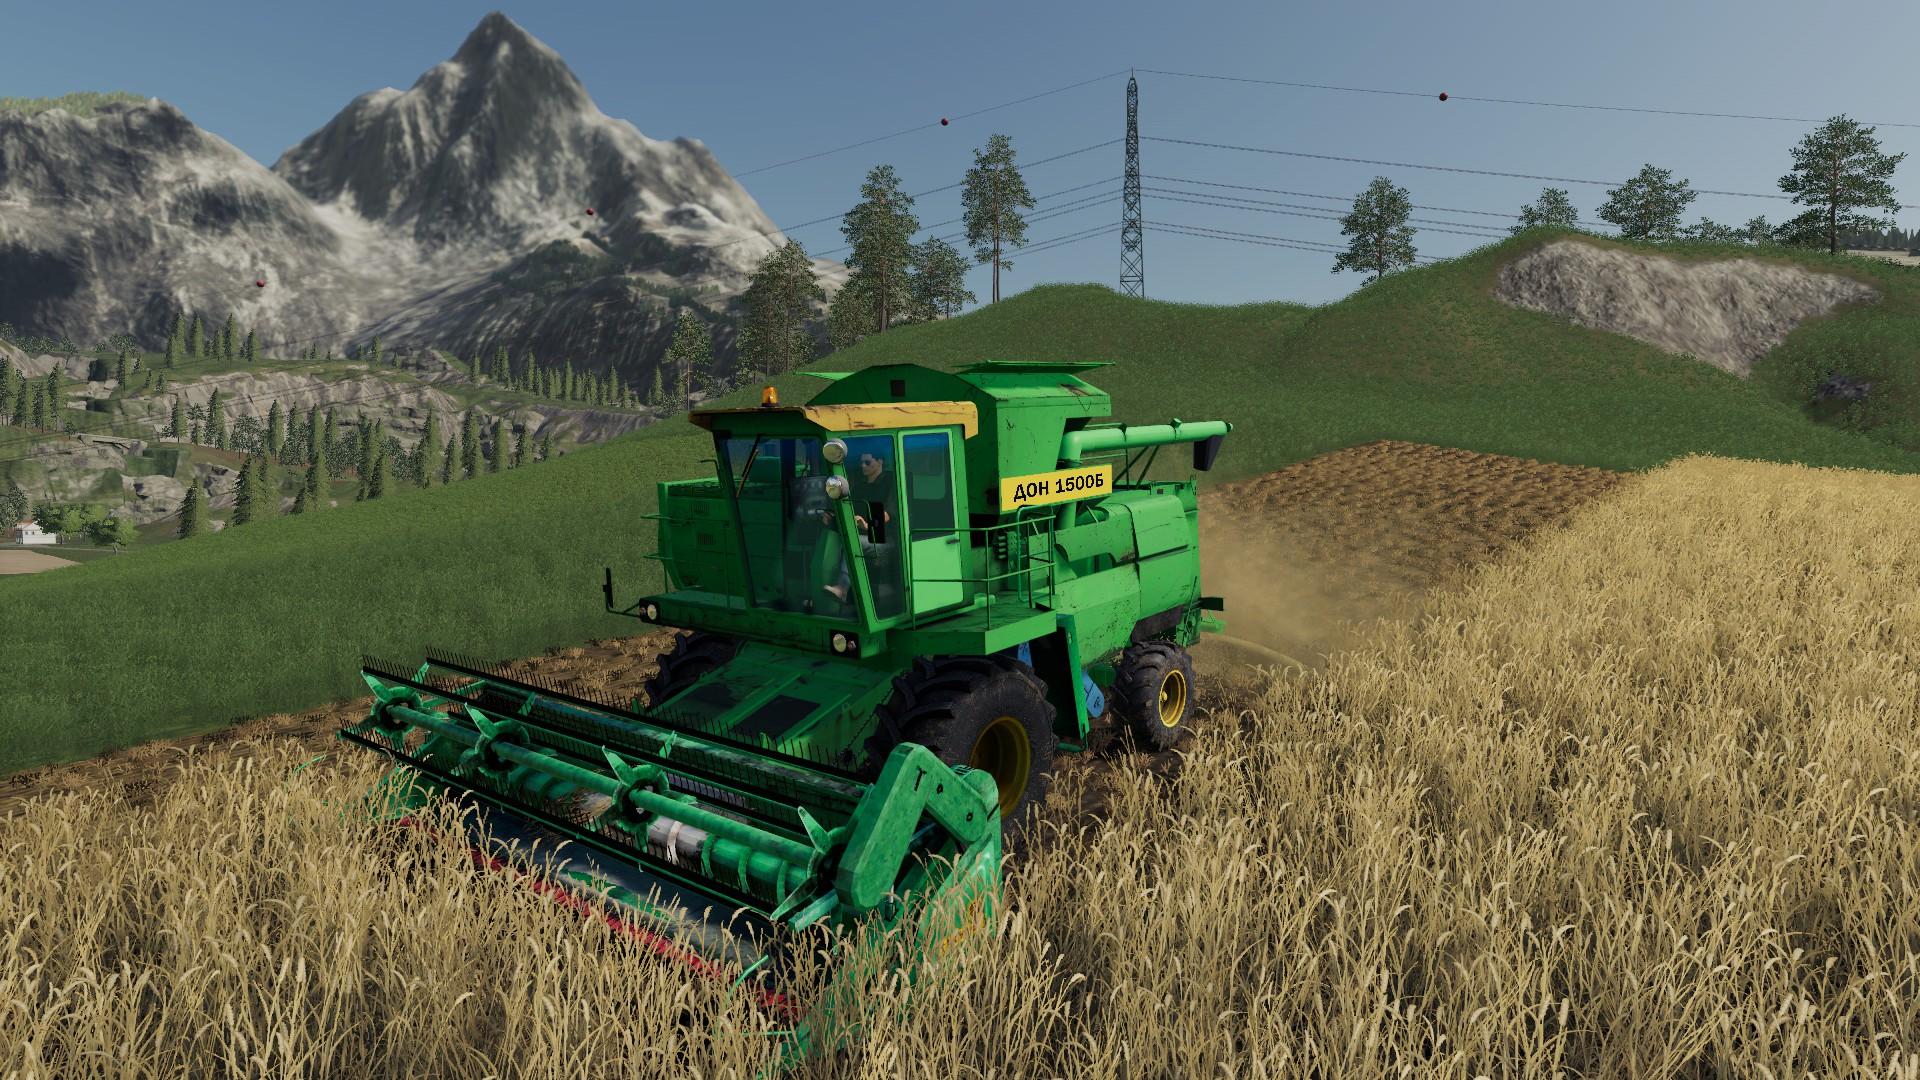 Игры ферма 2019. FS 19 Дон 1500. Farming Simulator 19. Дон 1500б для ФС 19. Дон-1500б fs22.